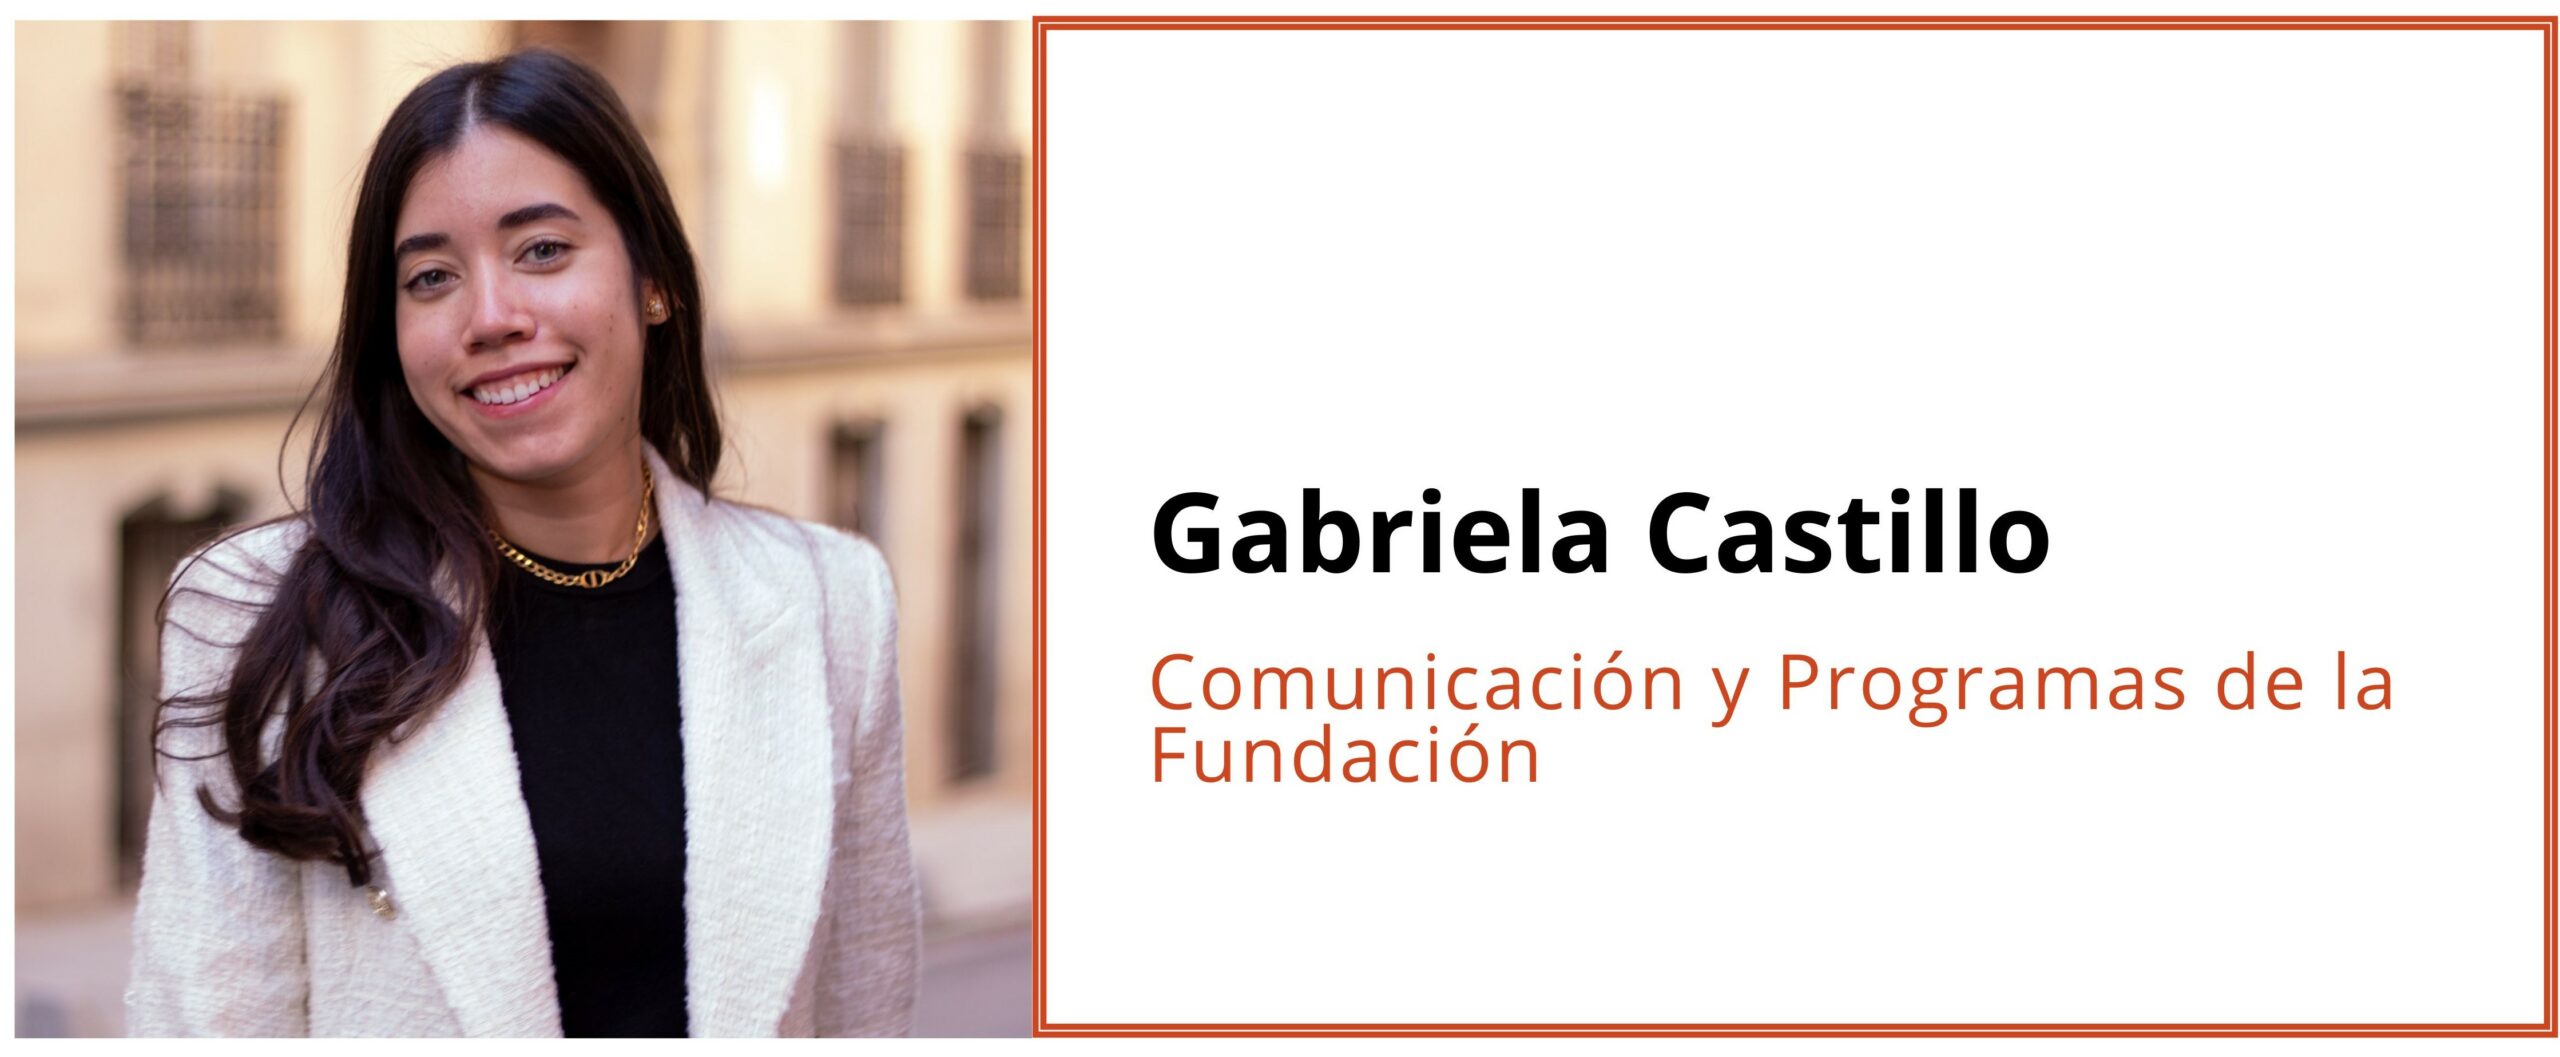 María Gabriela Castillo Cañas